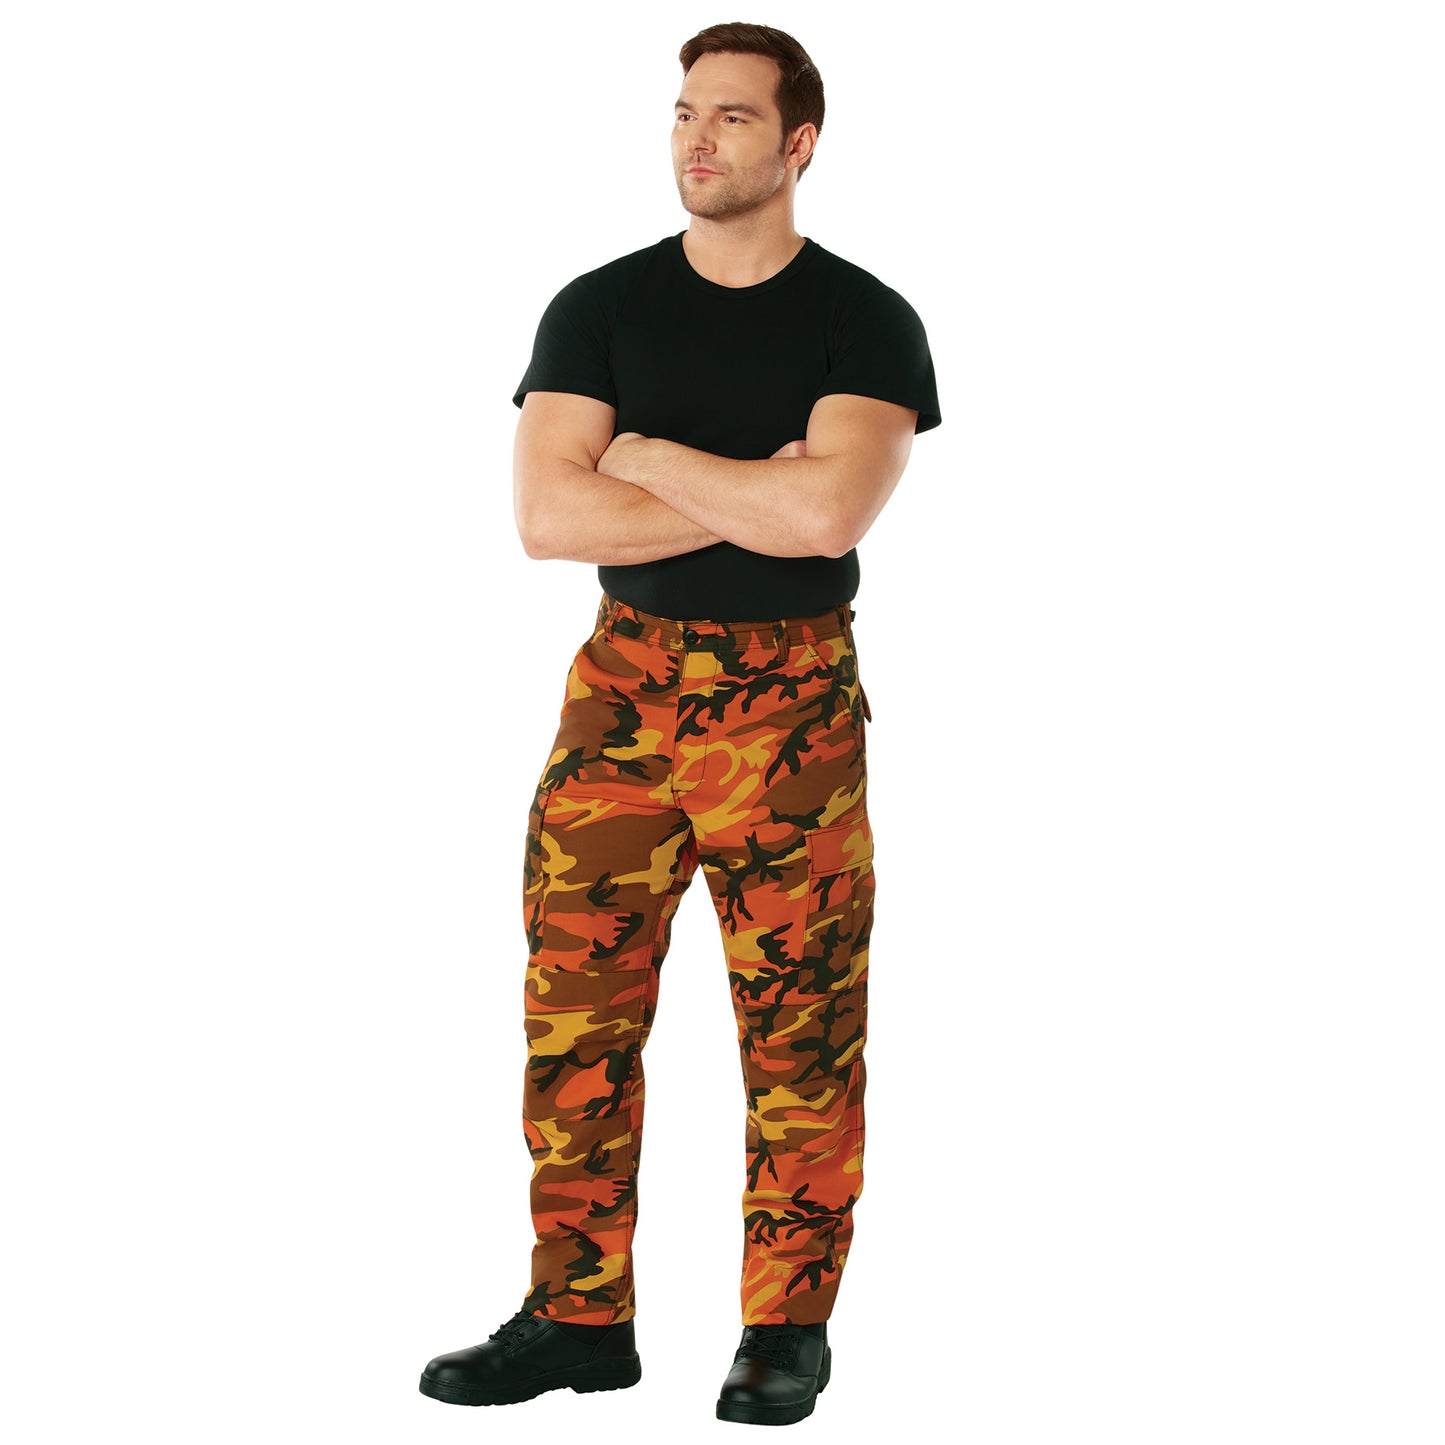 Rothco Color Camo Tactical BDU Pants - Savage Orange Camo